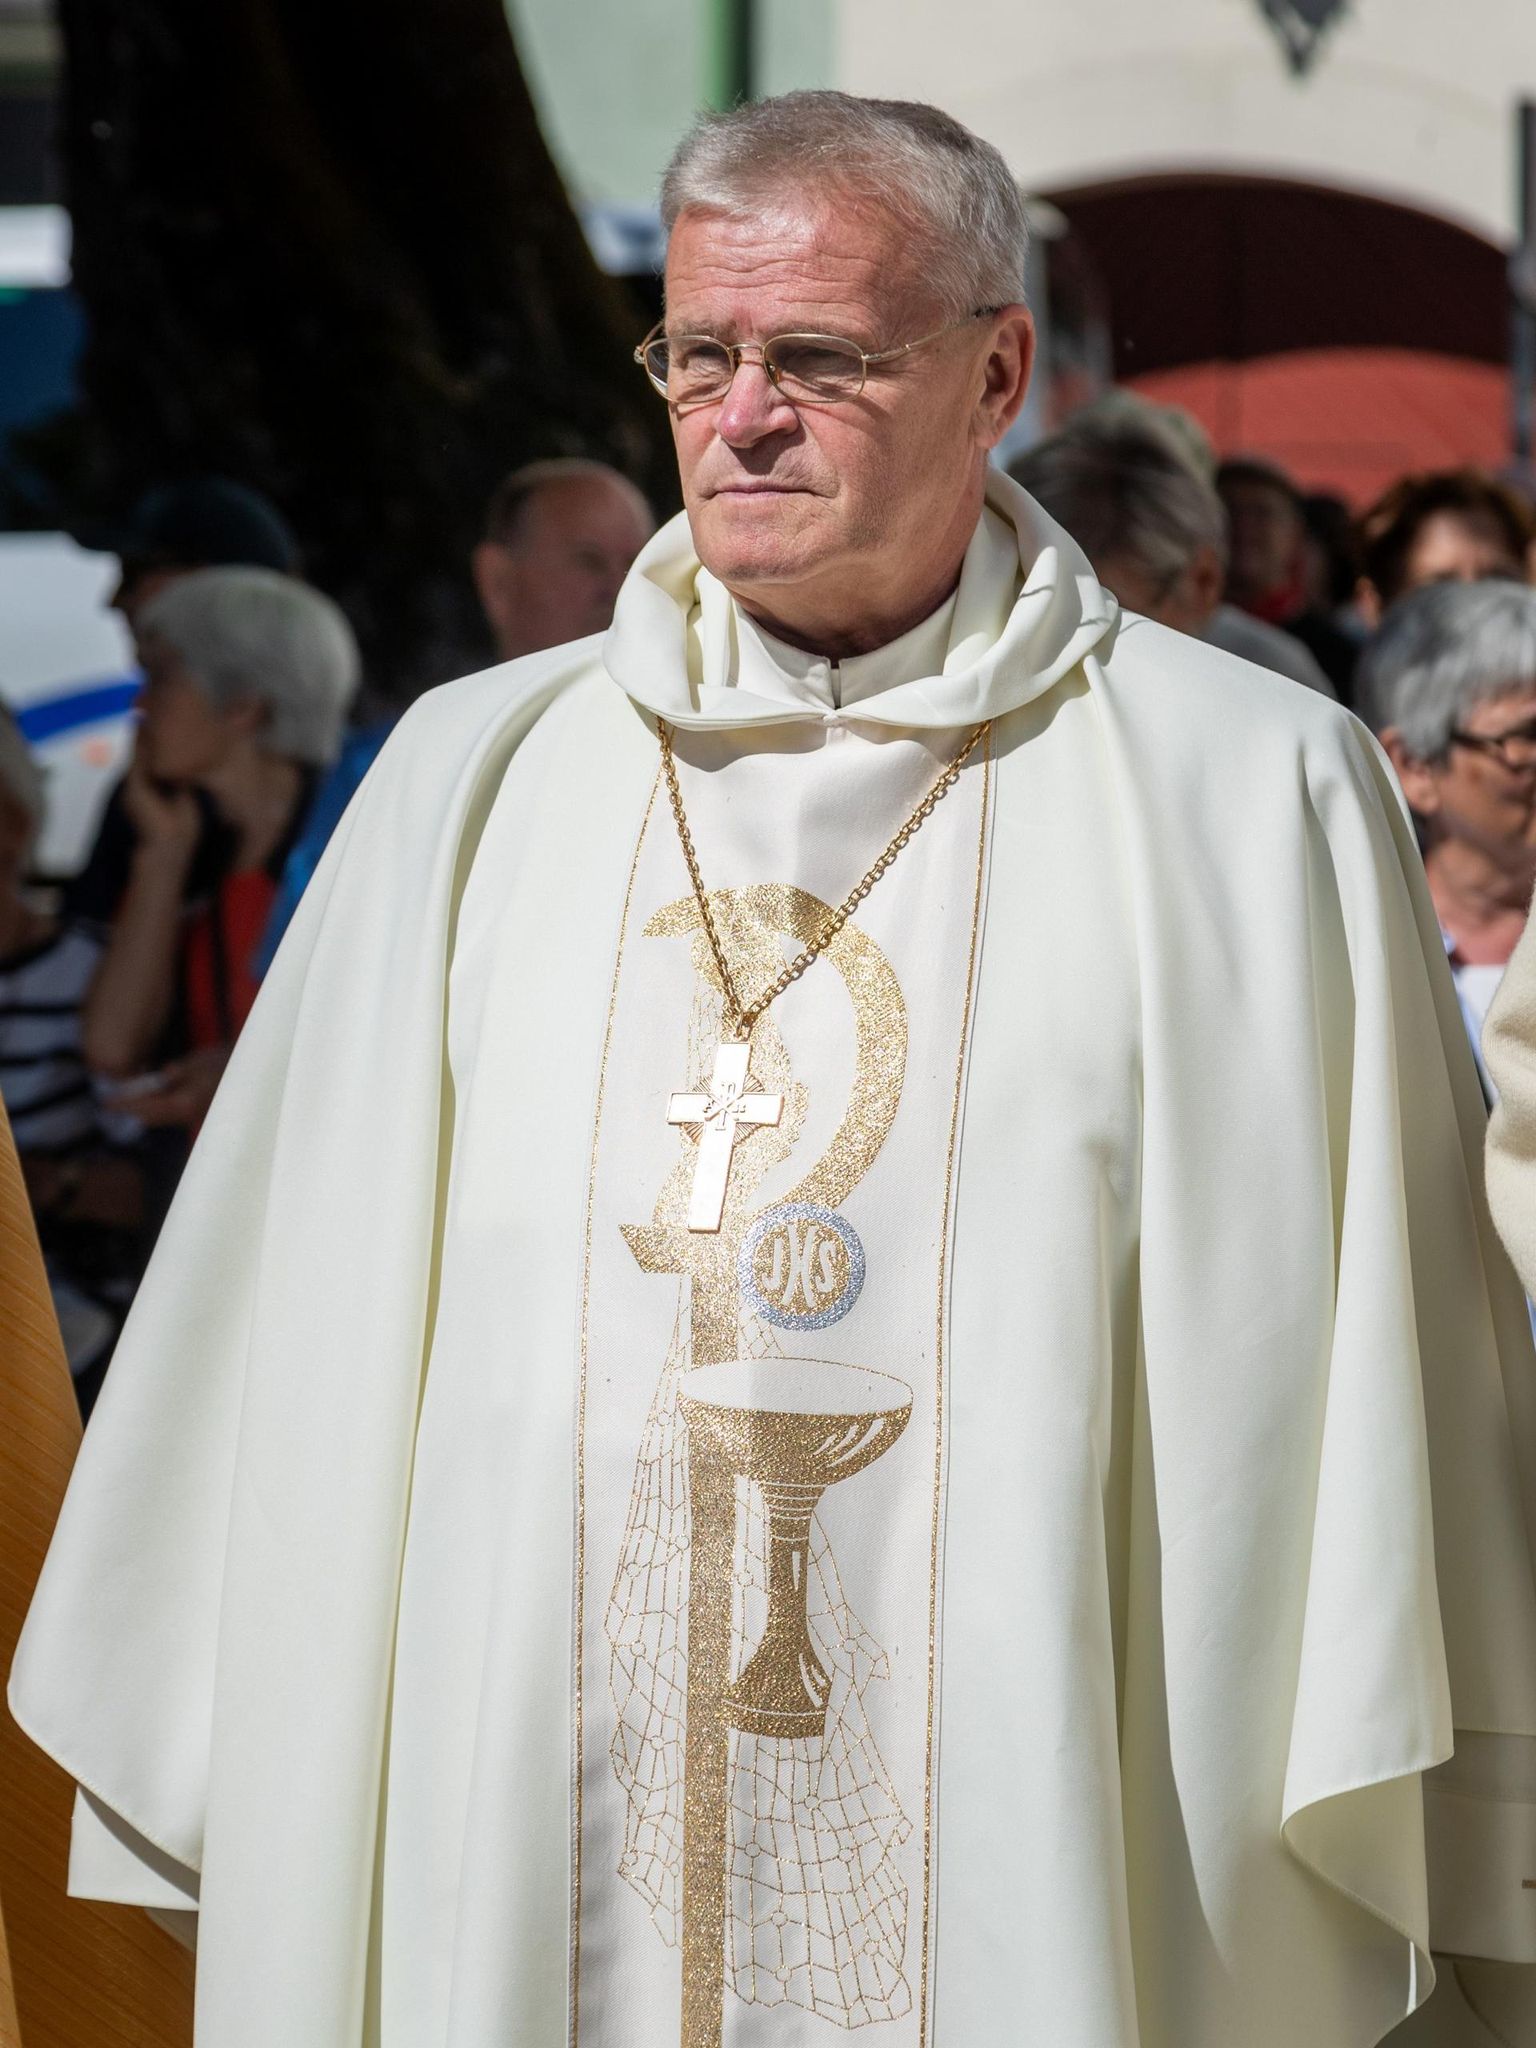 EELK peapiiskop emeeritus Andres Põder.

FOTO: Mihkel Maripuu